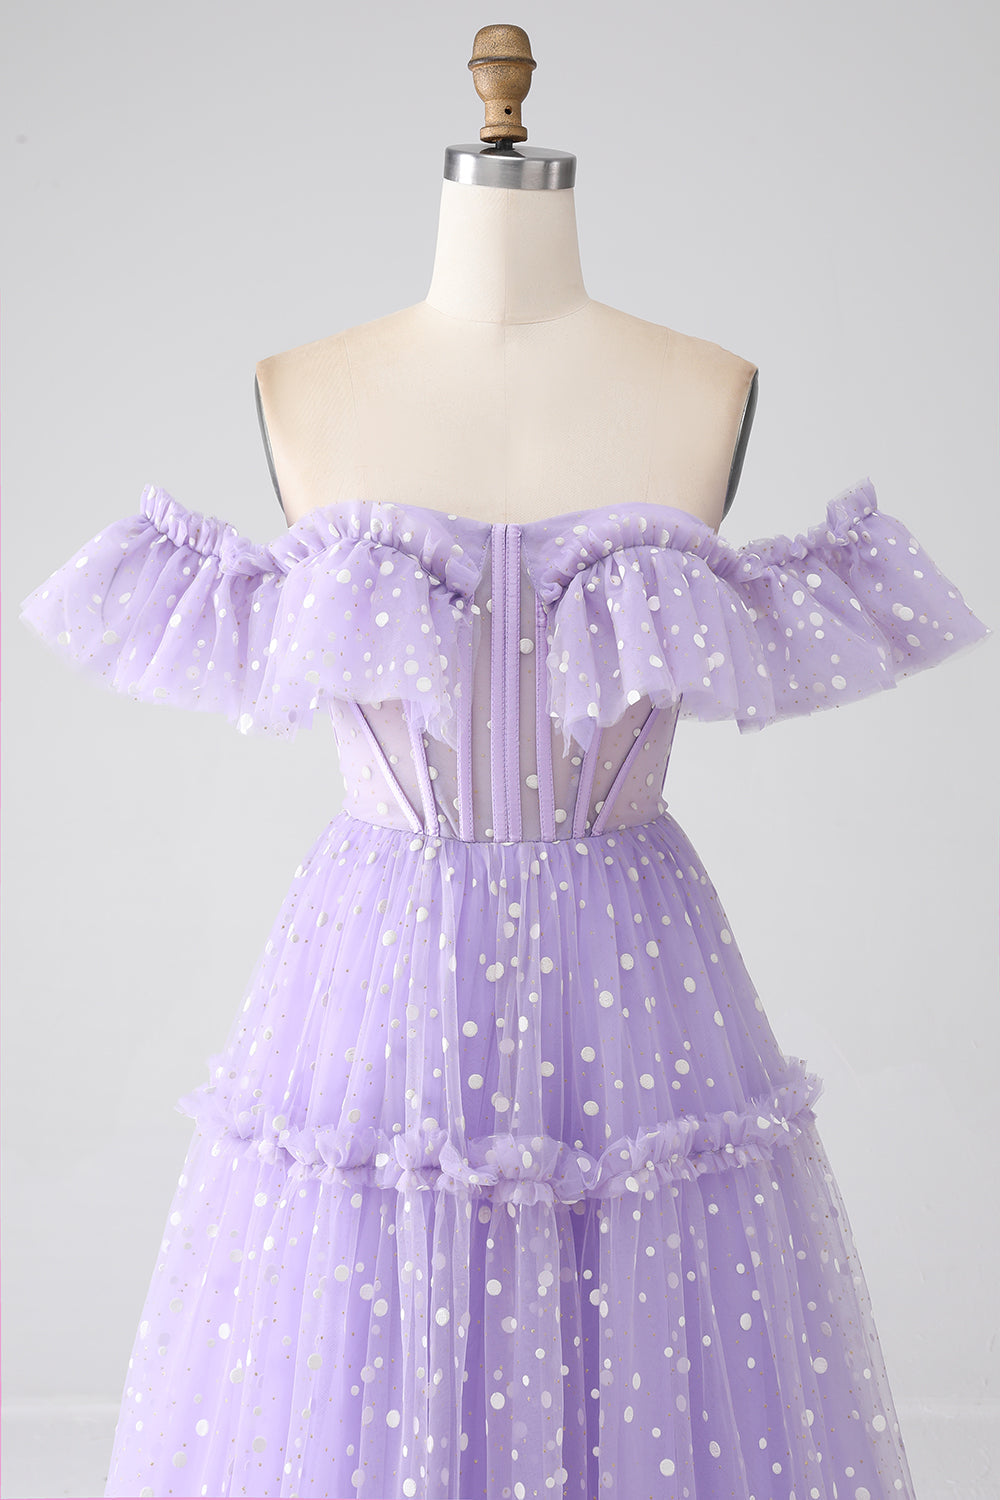 Off The Shoulder Lilac Corset Prom Dress